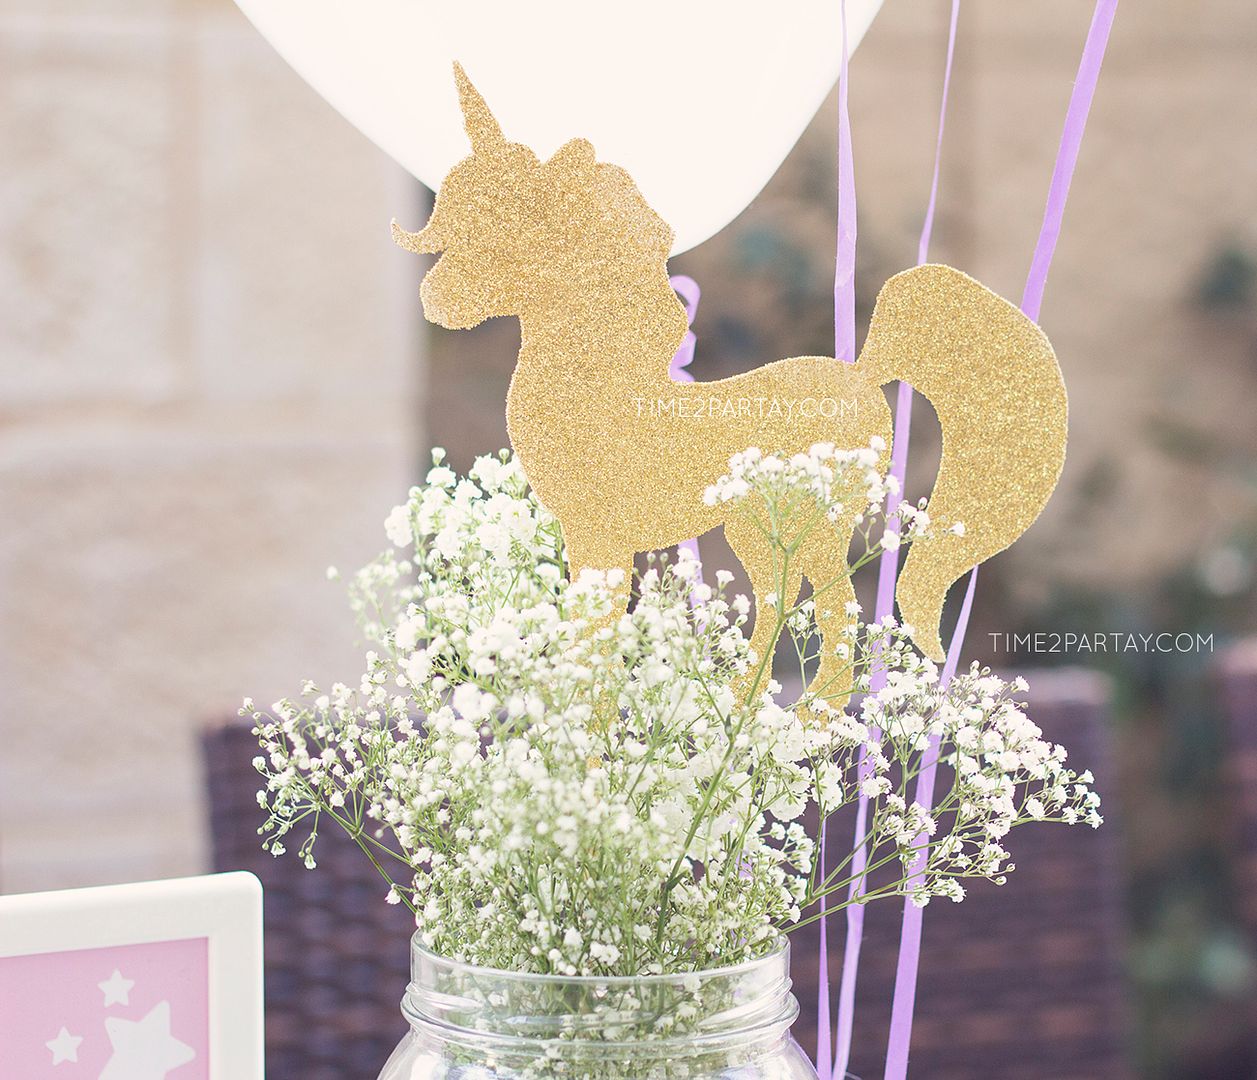 Unicorn birthday party ideas: Gold glittery unicorn ornaments by Time 2 Partay